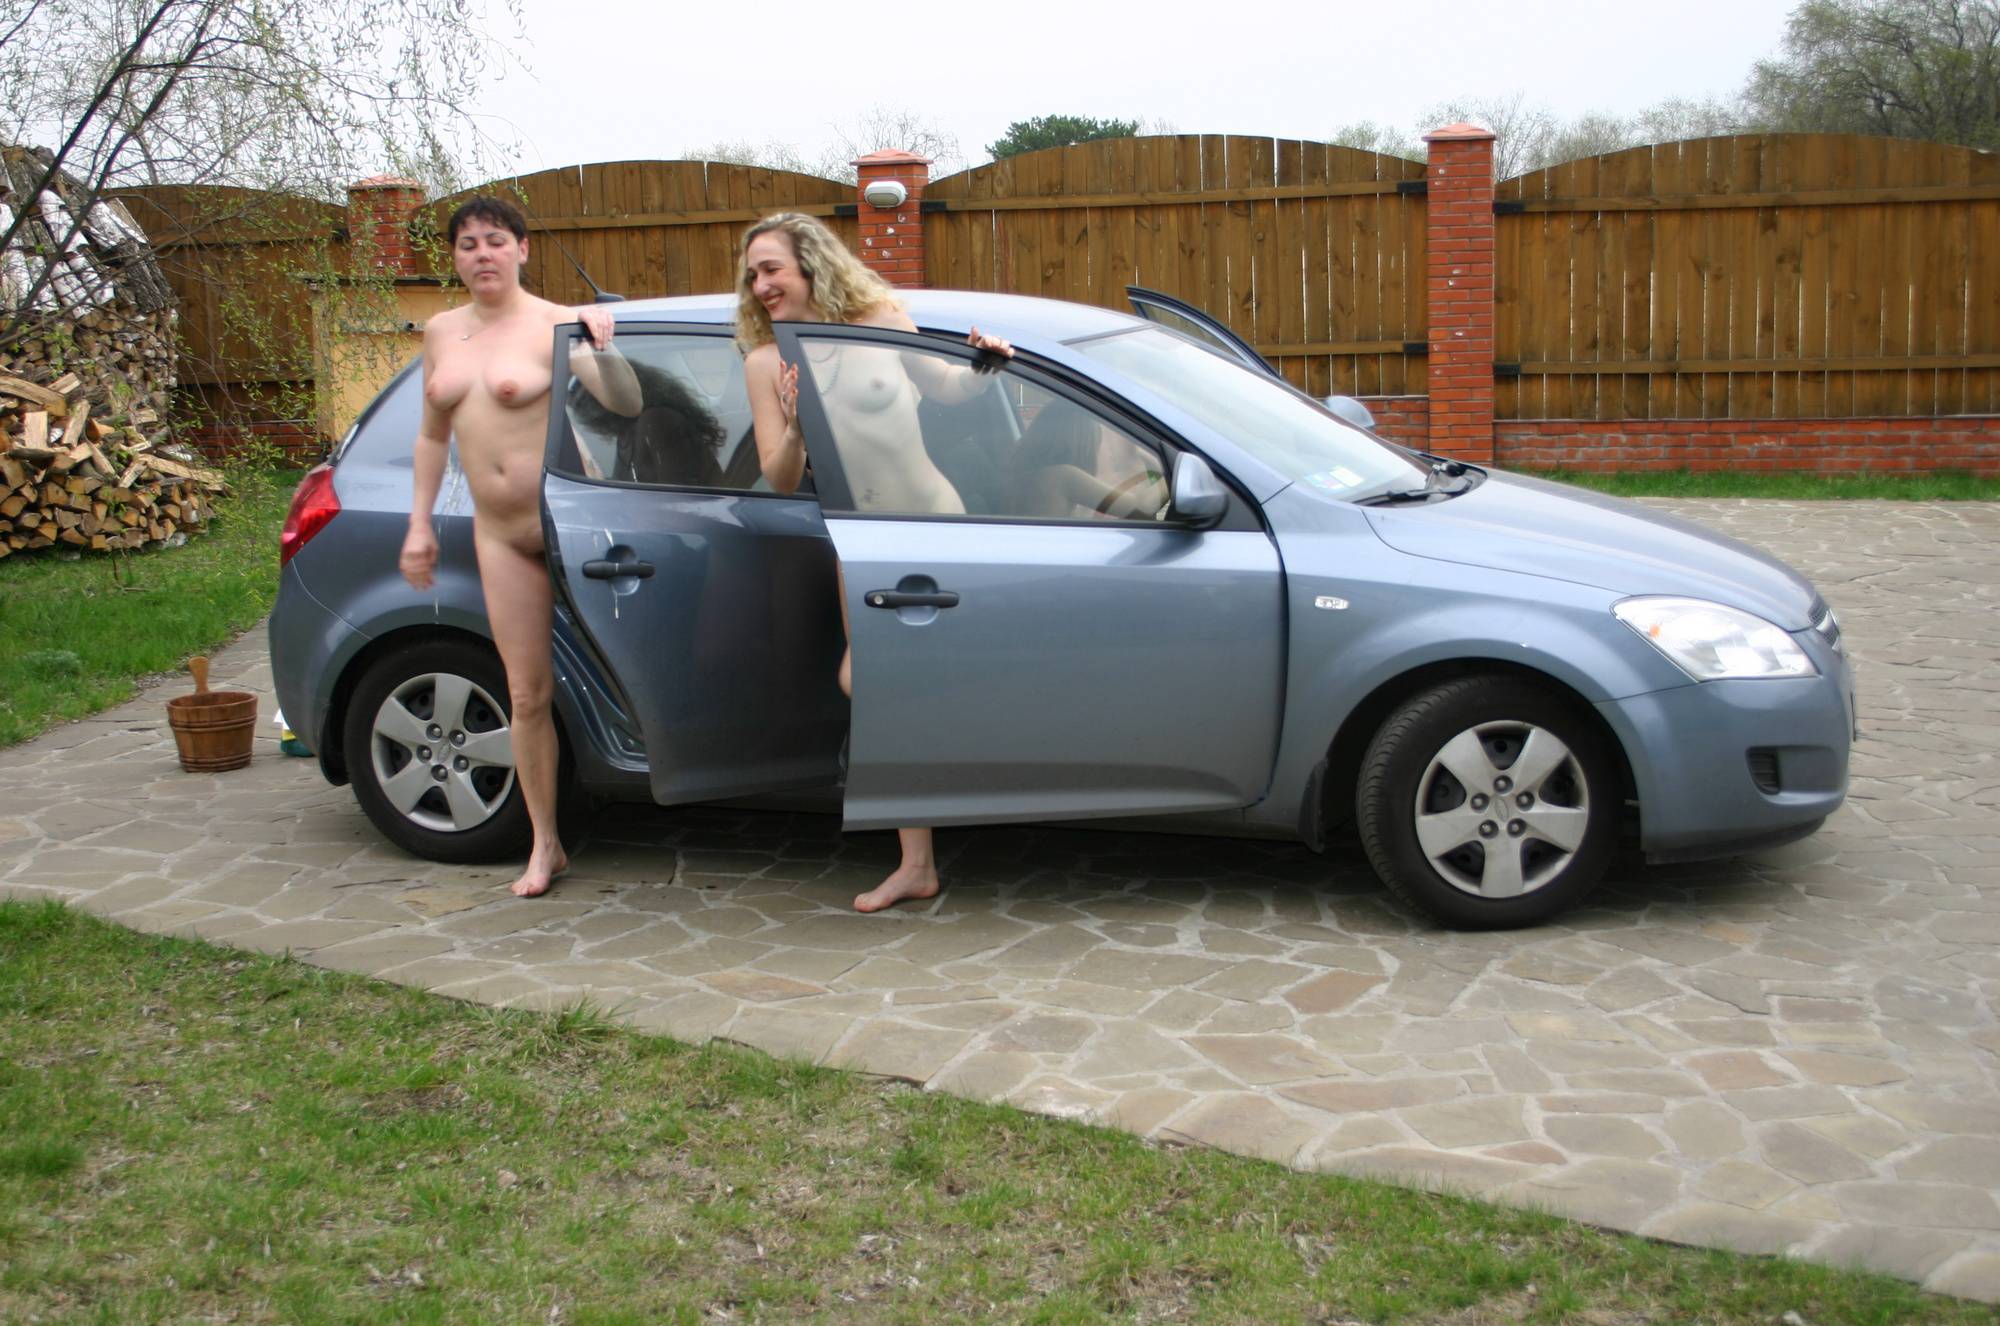 Pure Nudism Pics-Naturist Carwash Arrivals - 1